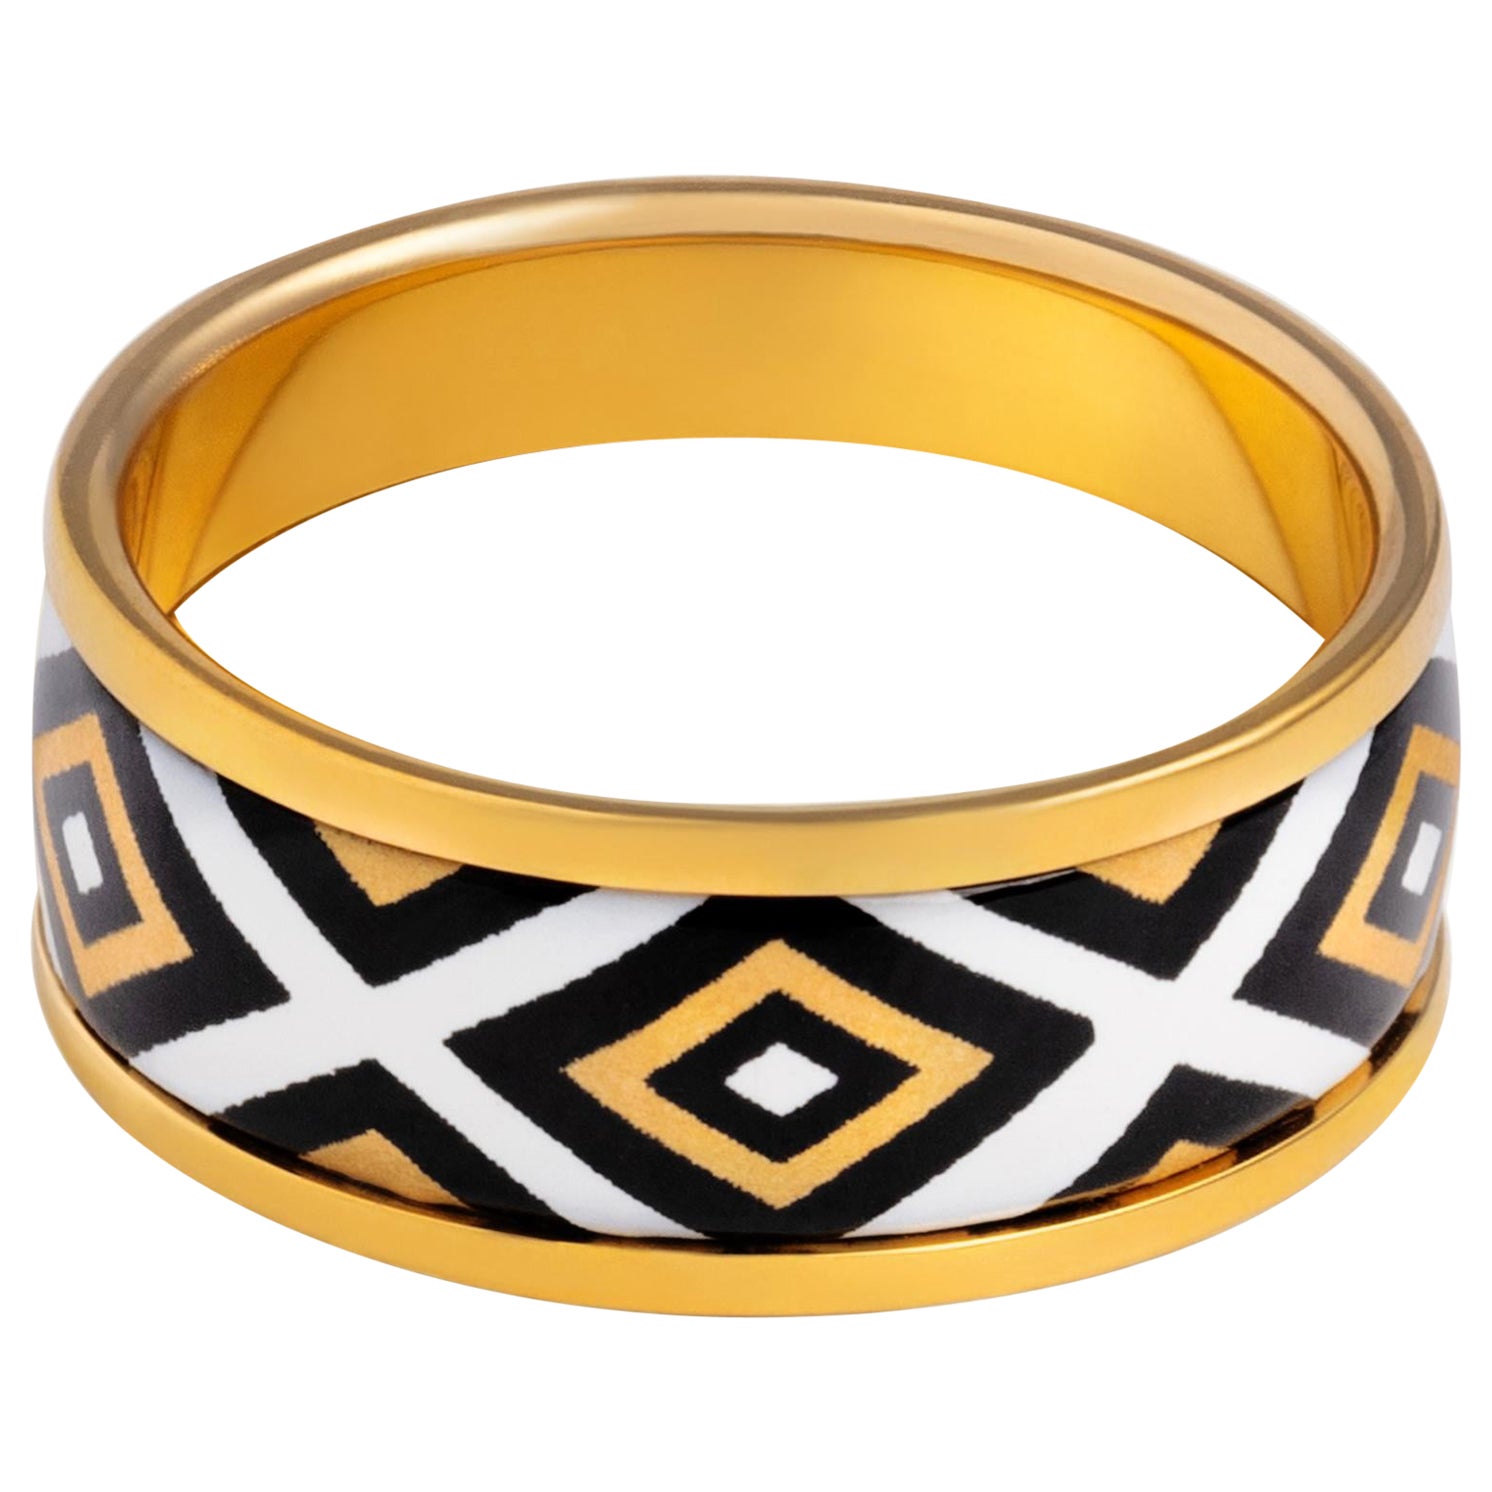 Handbemalter, vergoldeter, vergoldeter Edelstahl-Ring mit FeuerEmaille-Details